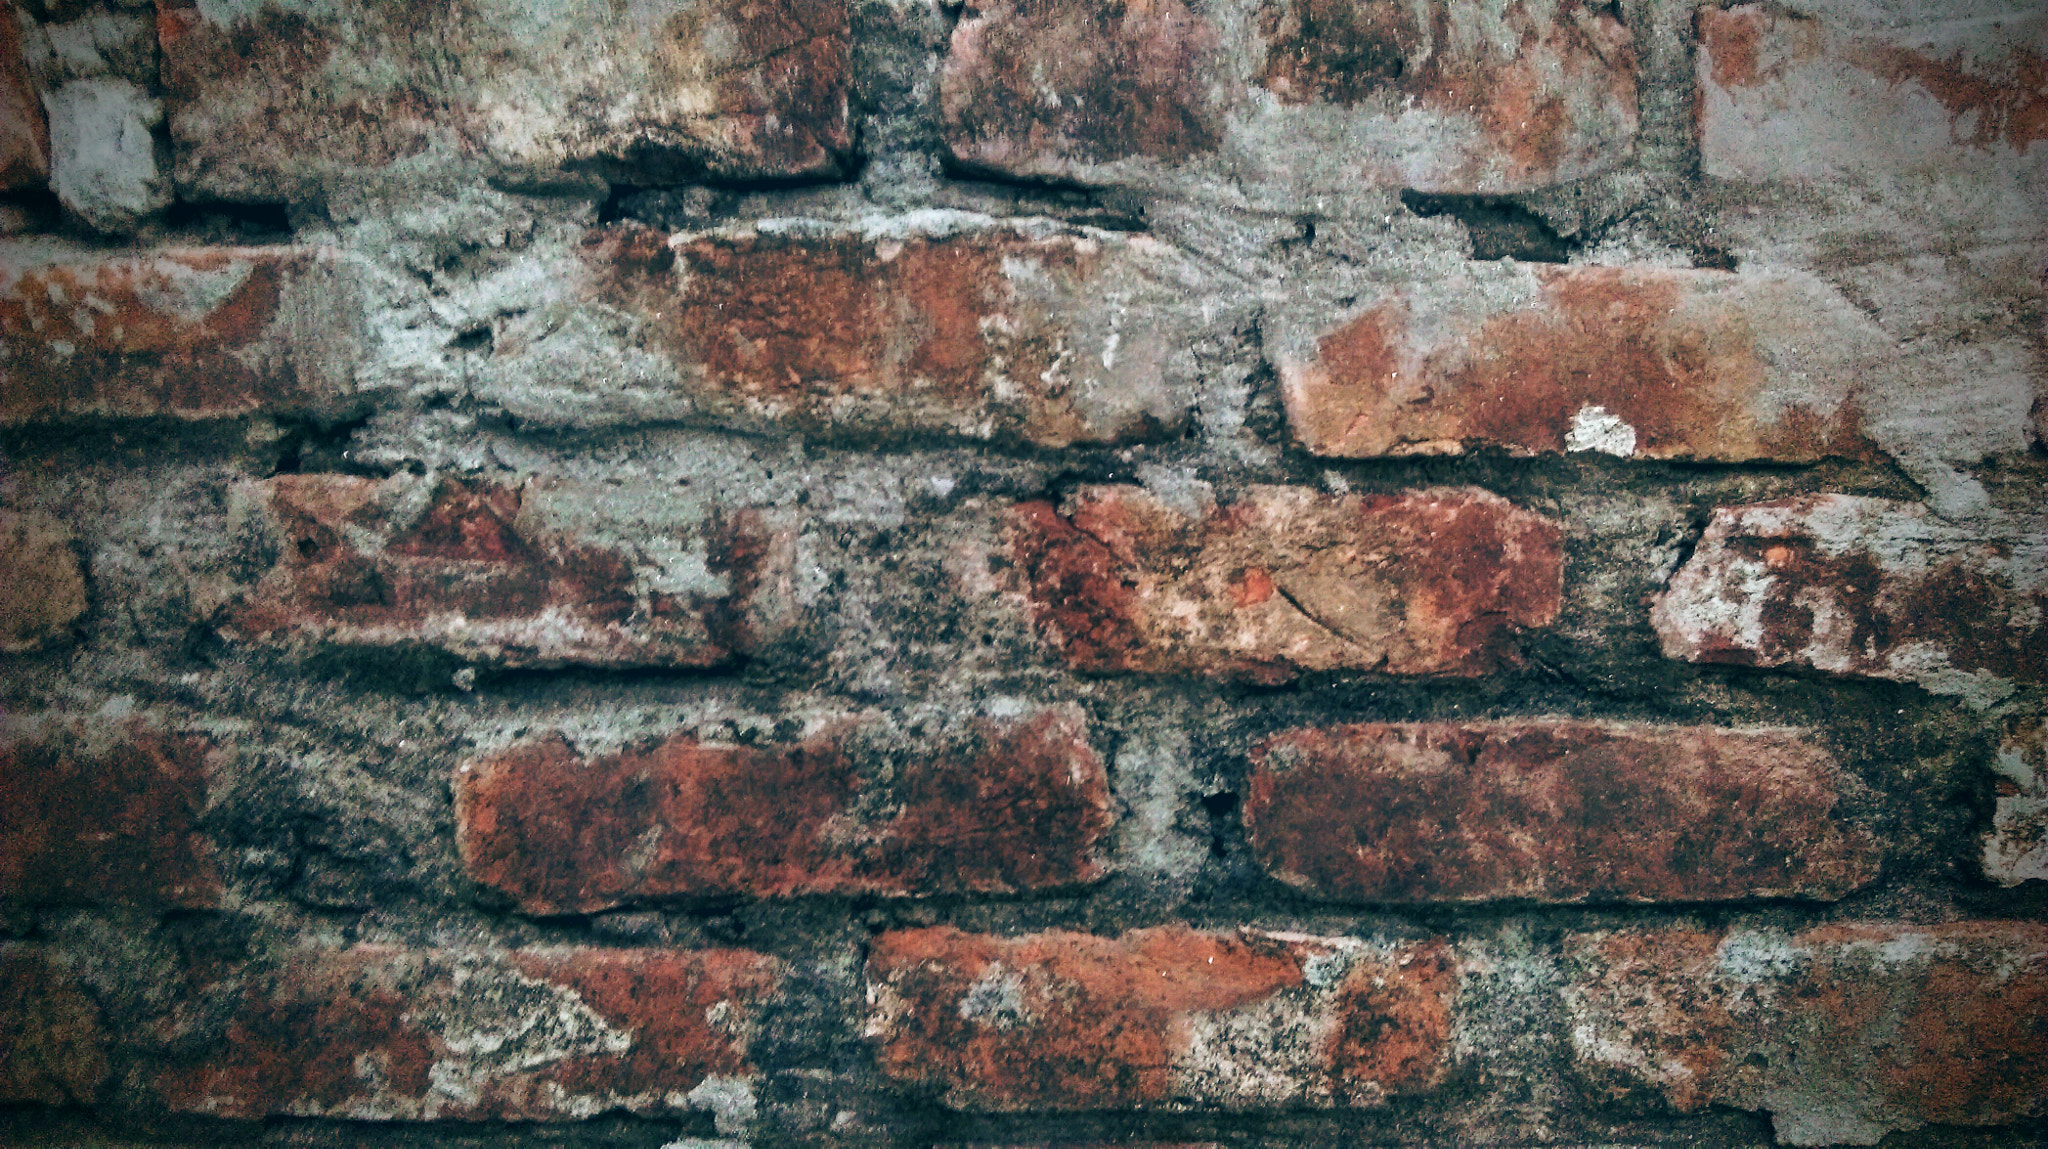 HTC DESIRE 820 DUAL SIM sample photo. The brick wall photography